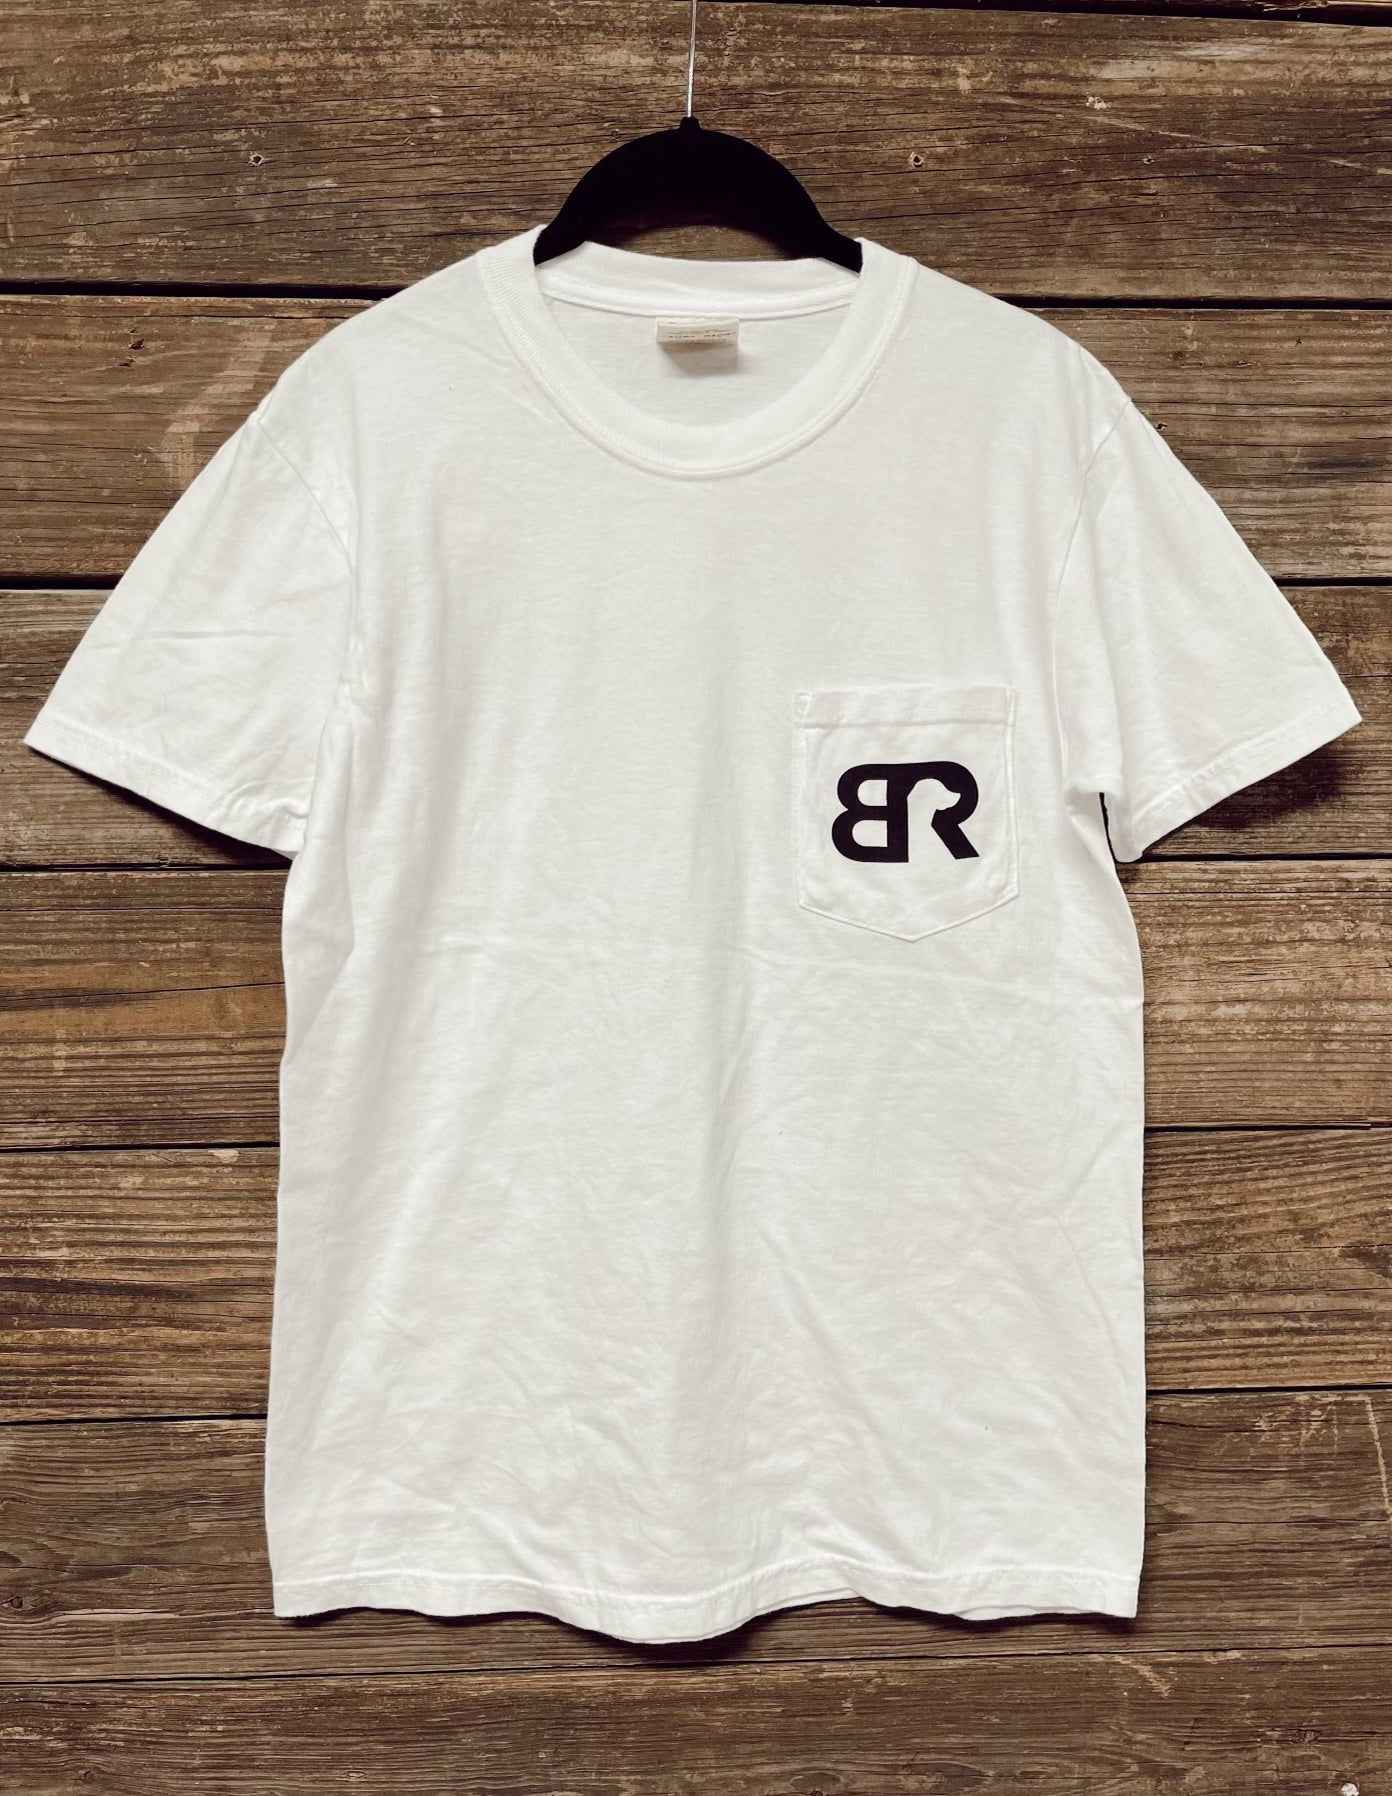 BR Pocket T-shirt